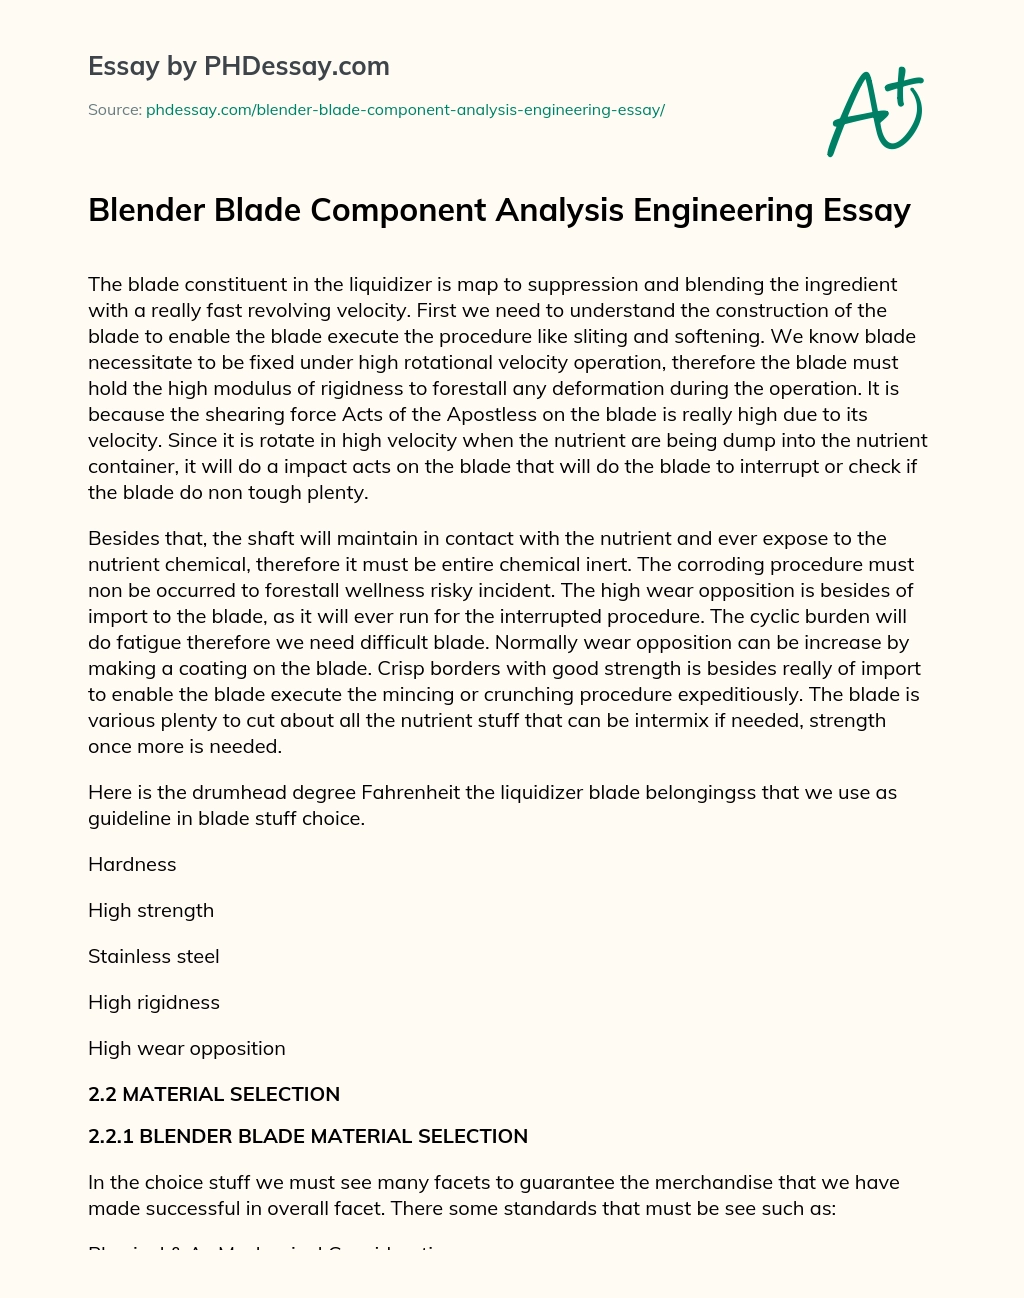 Blender Blade Component Analysis Engineering Essay essay